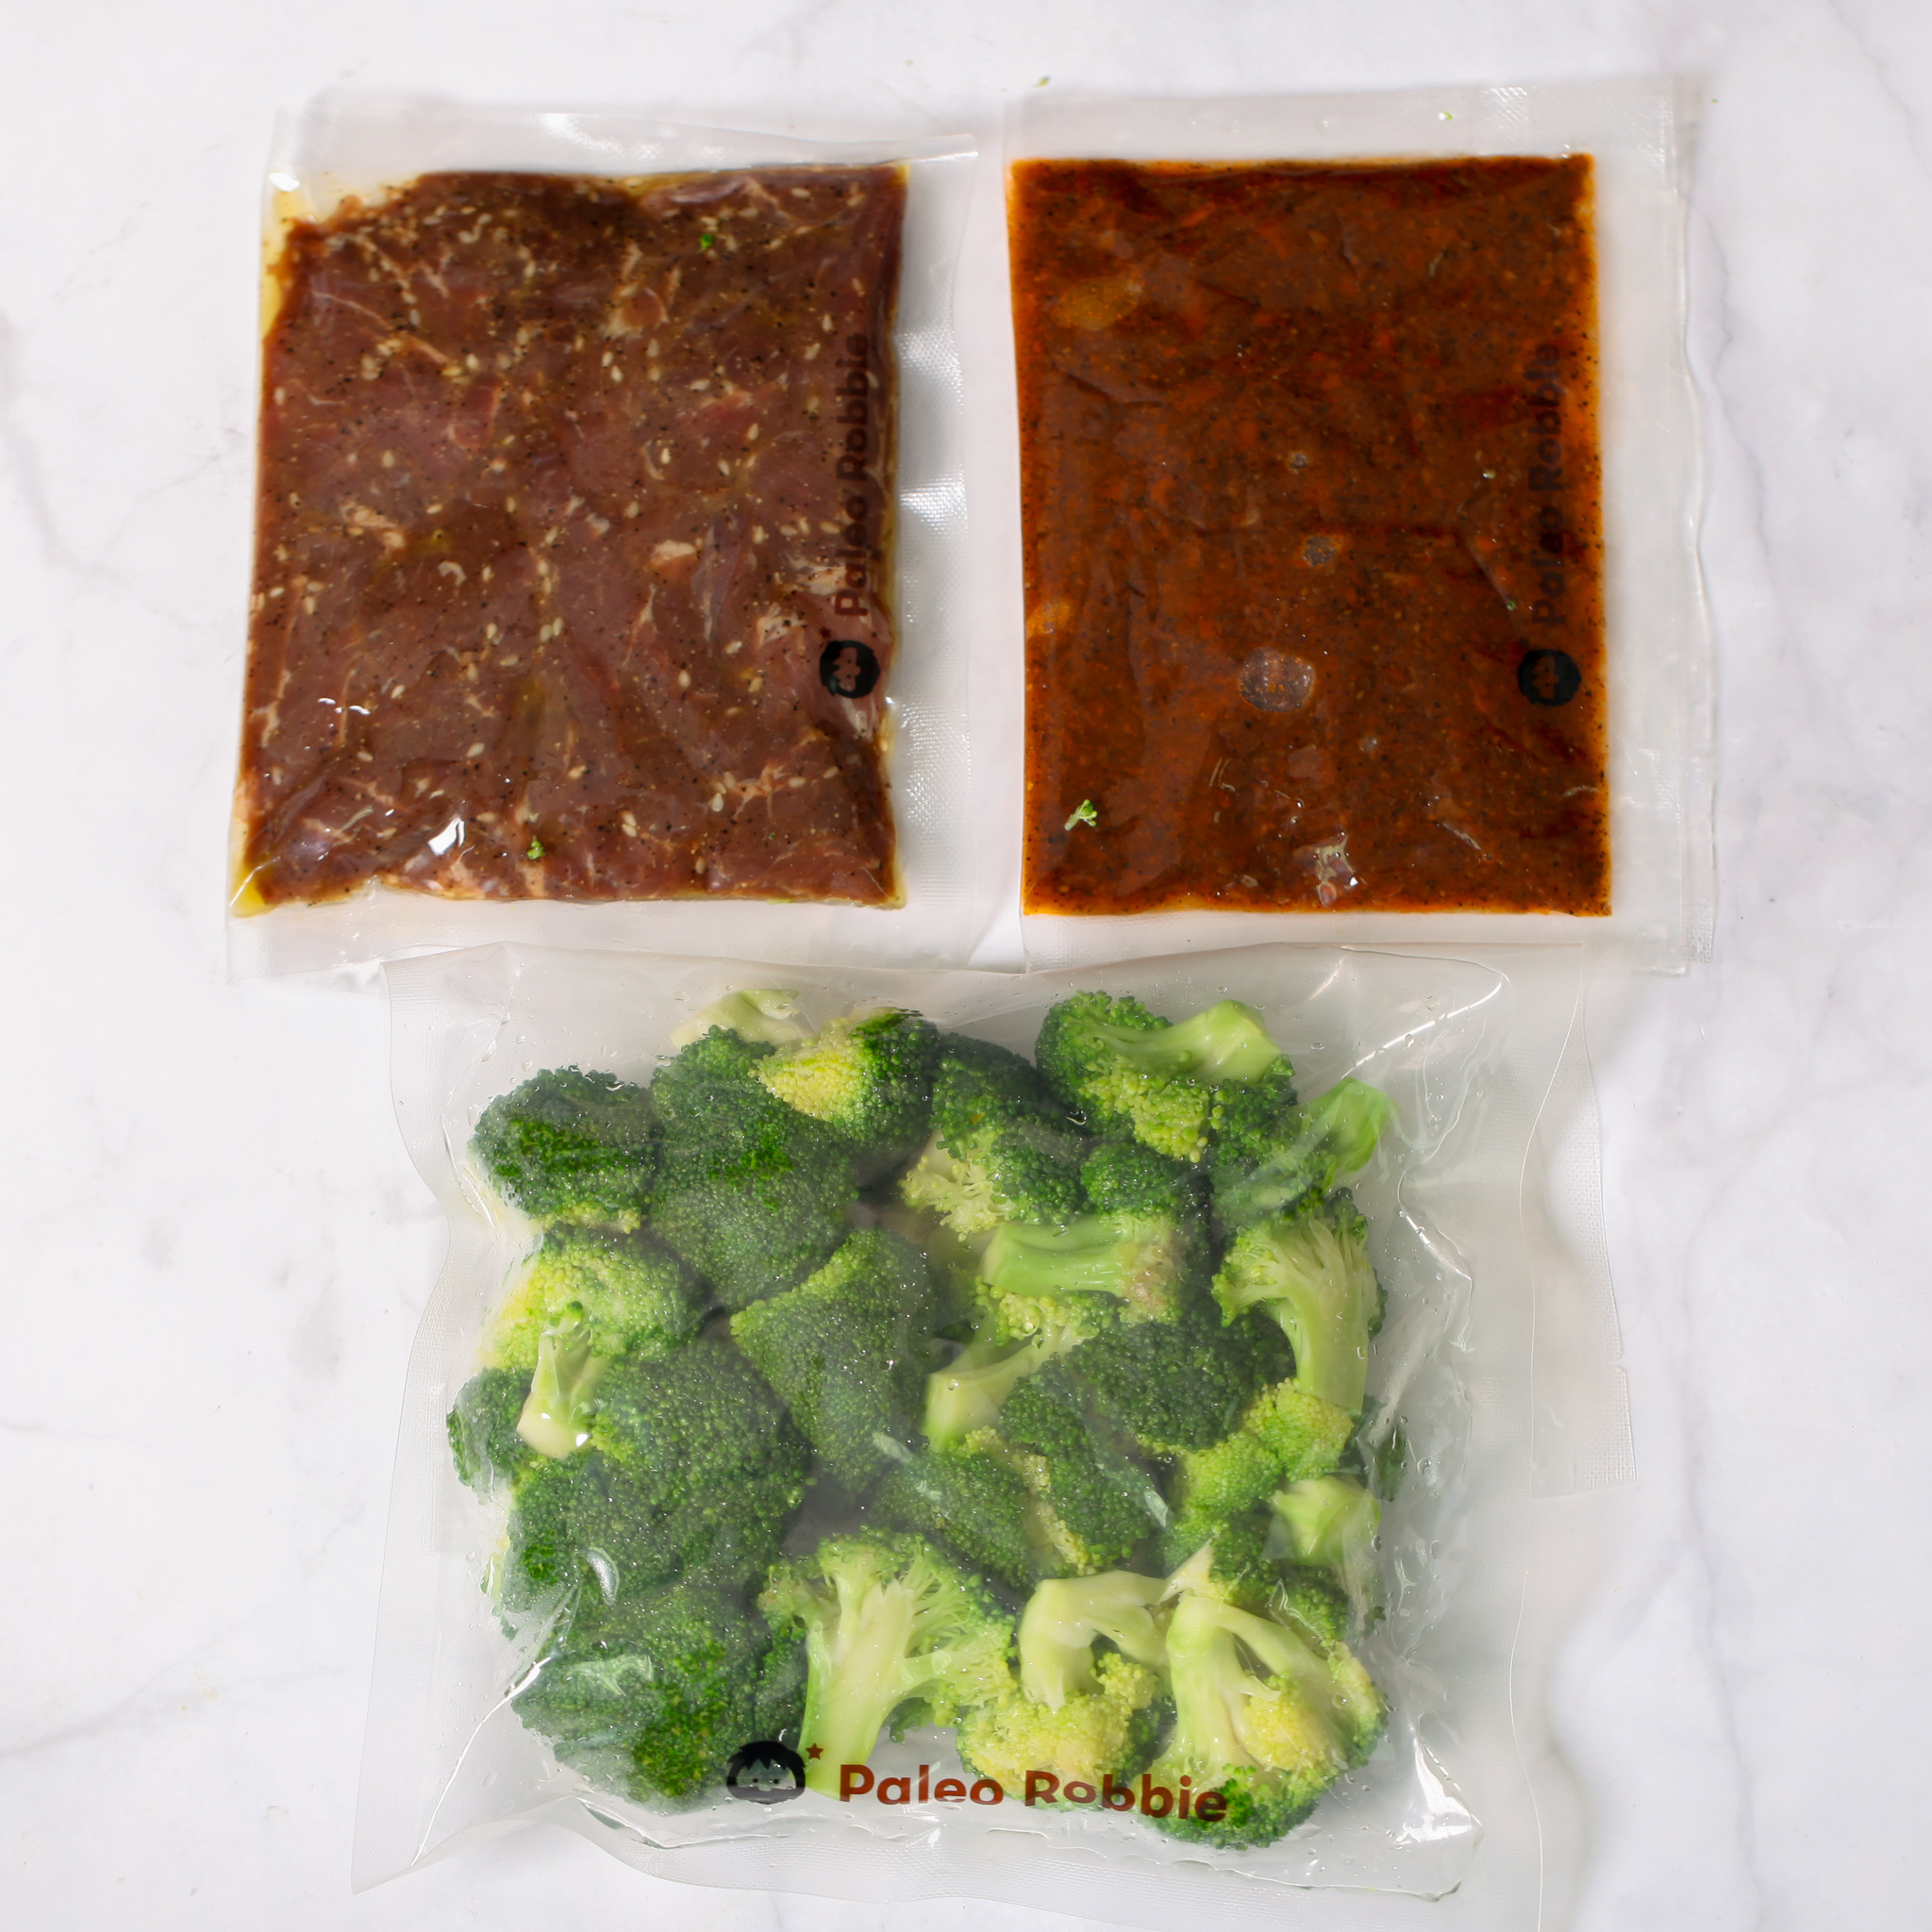 Beef & Broccoli Stir Fry Kit